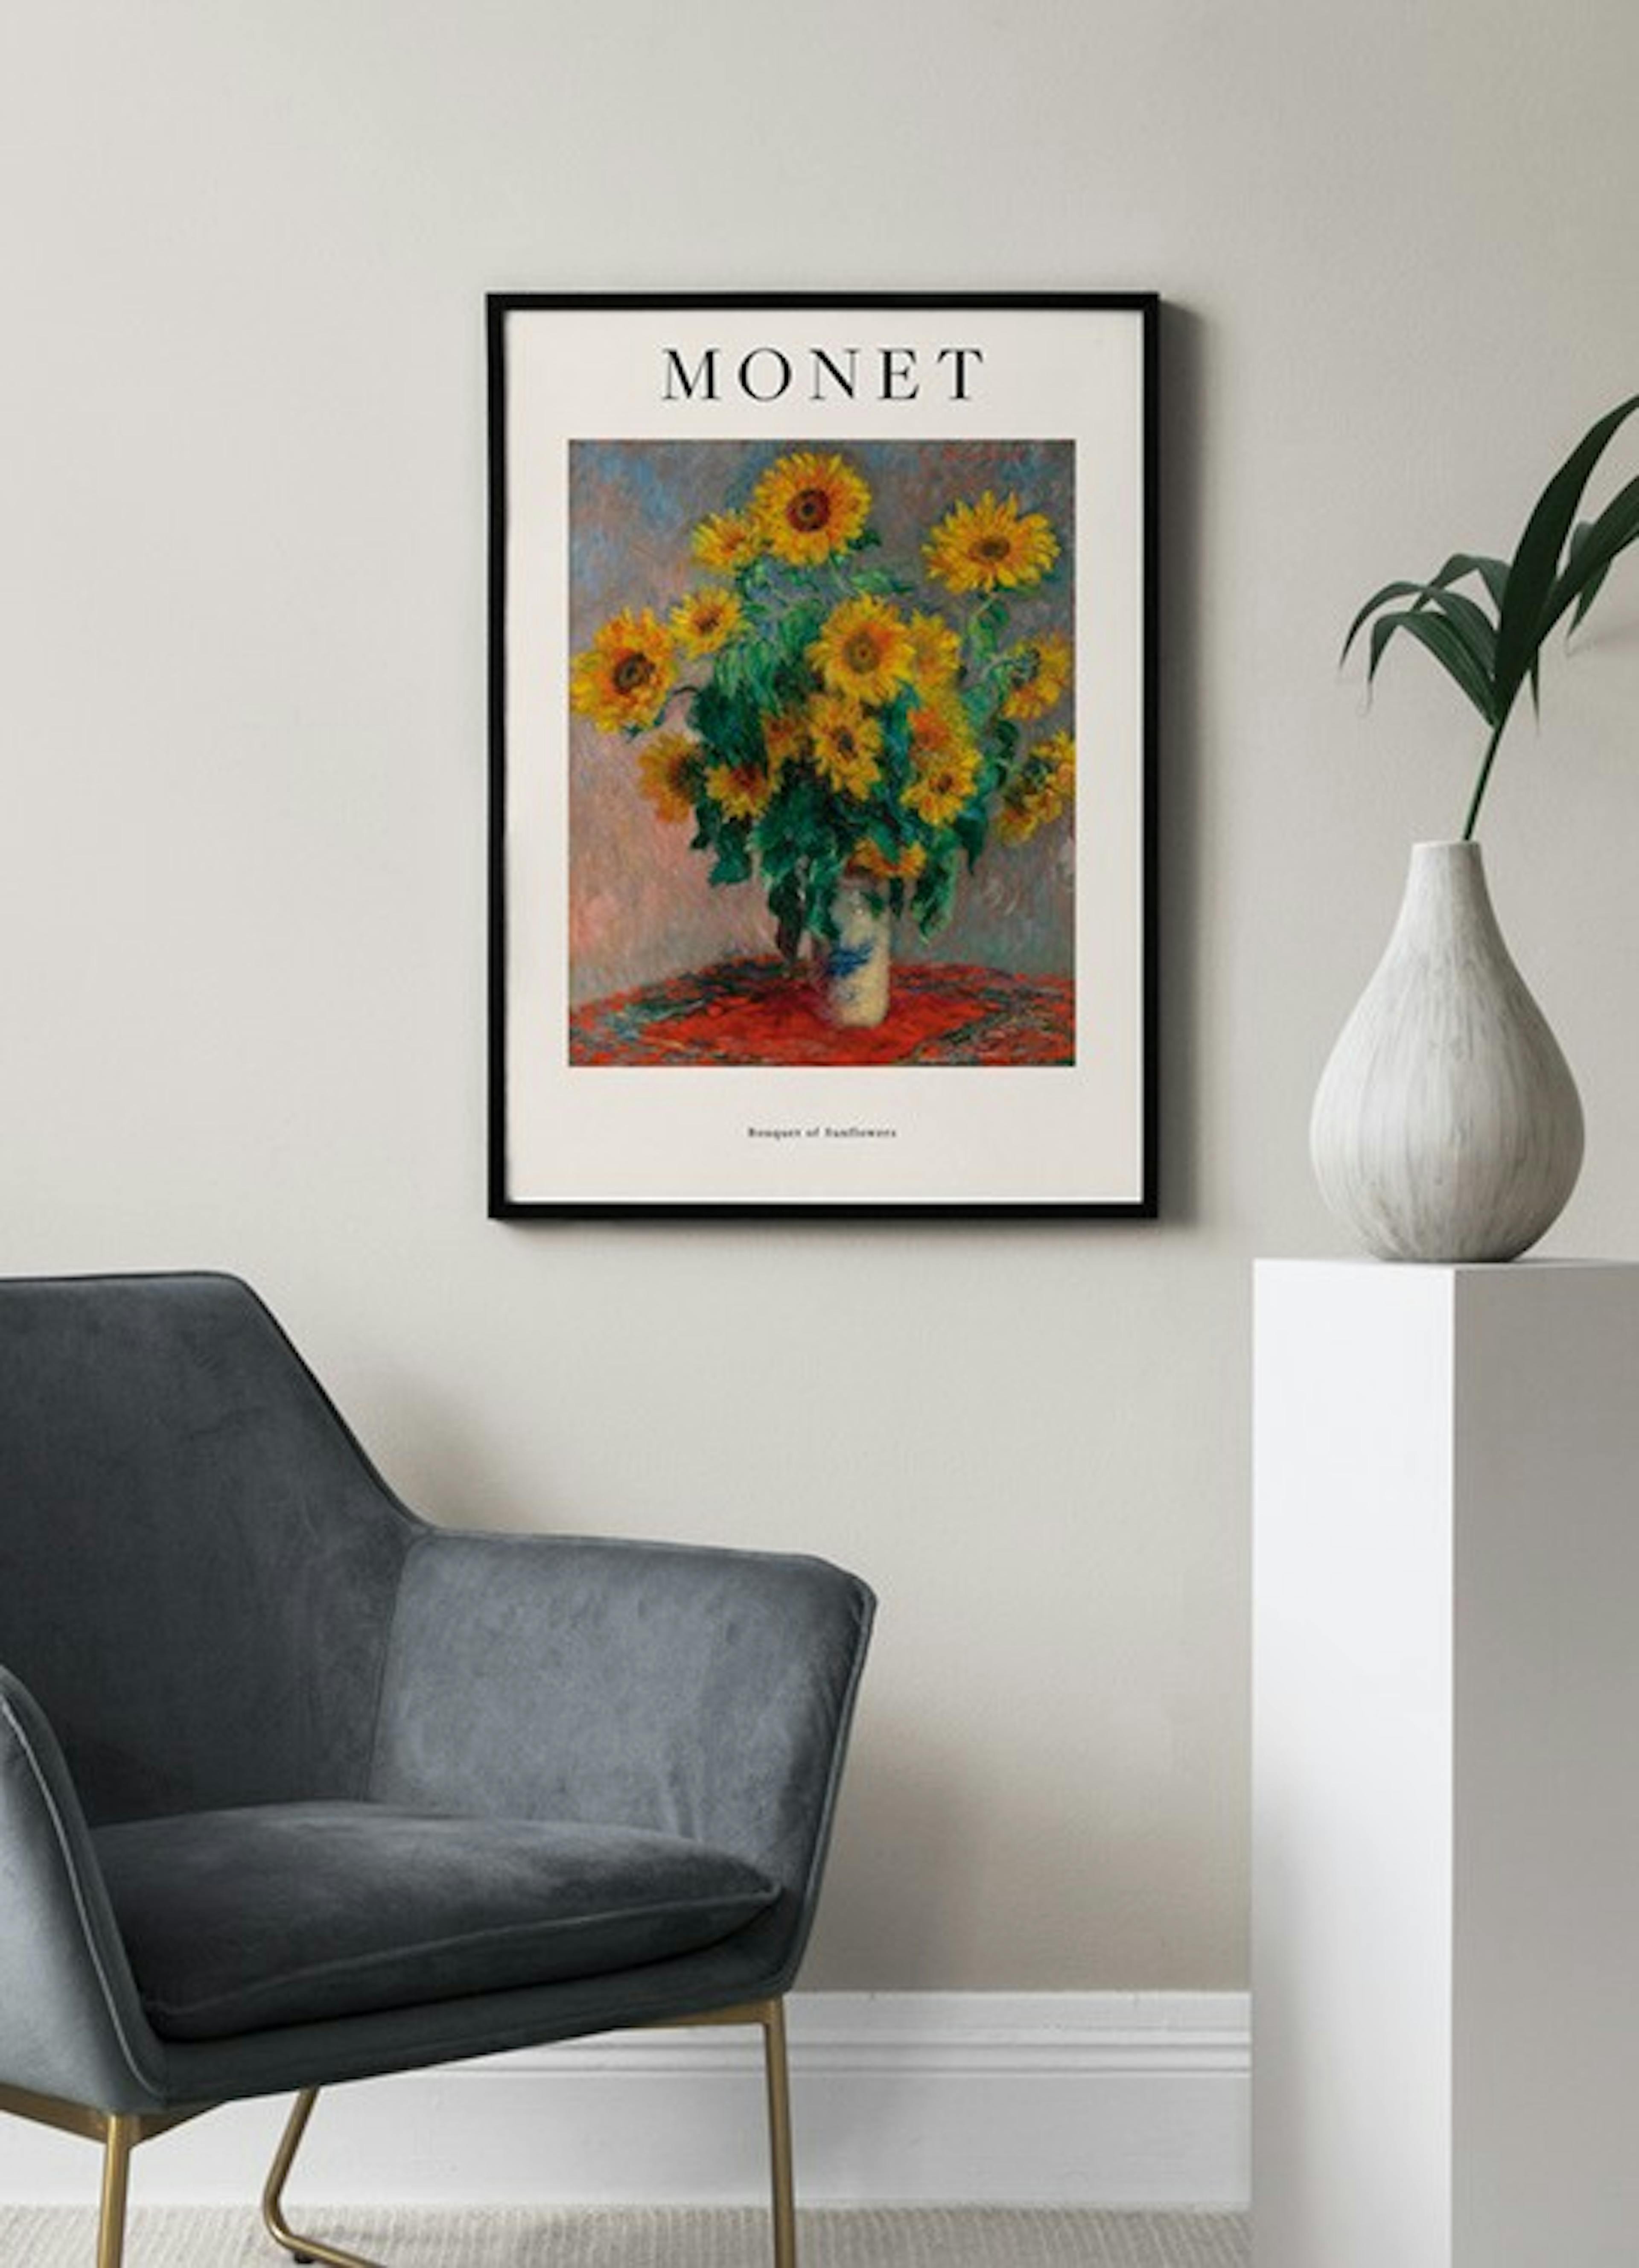 Monet - Bouquet of Sunflowers Print